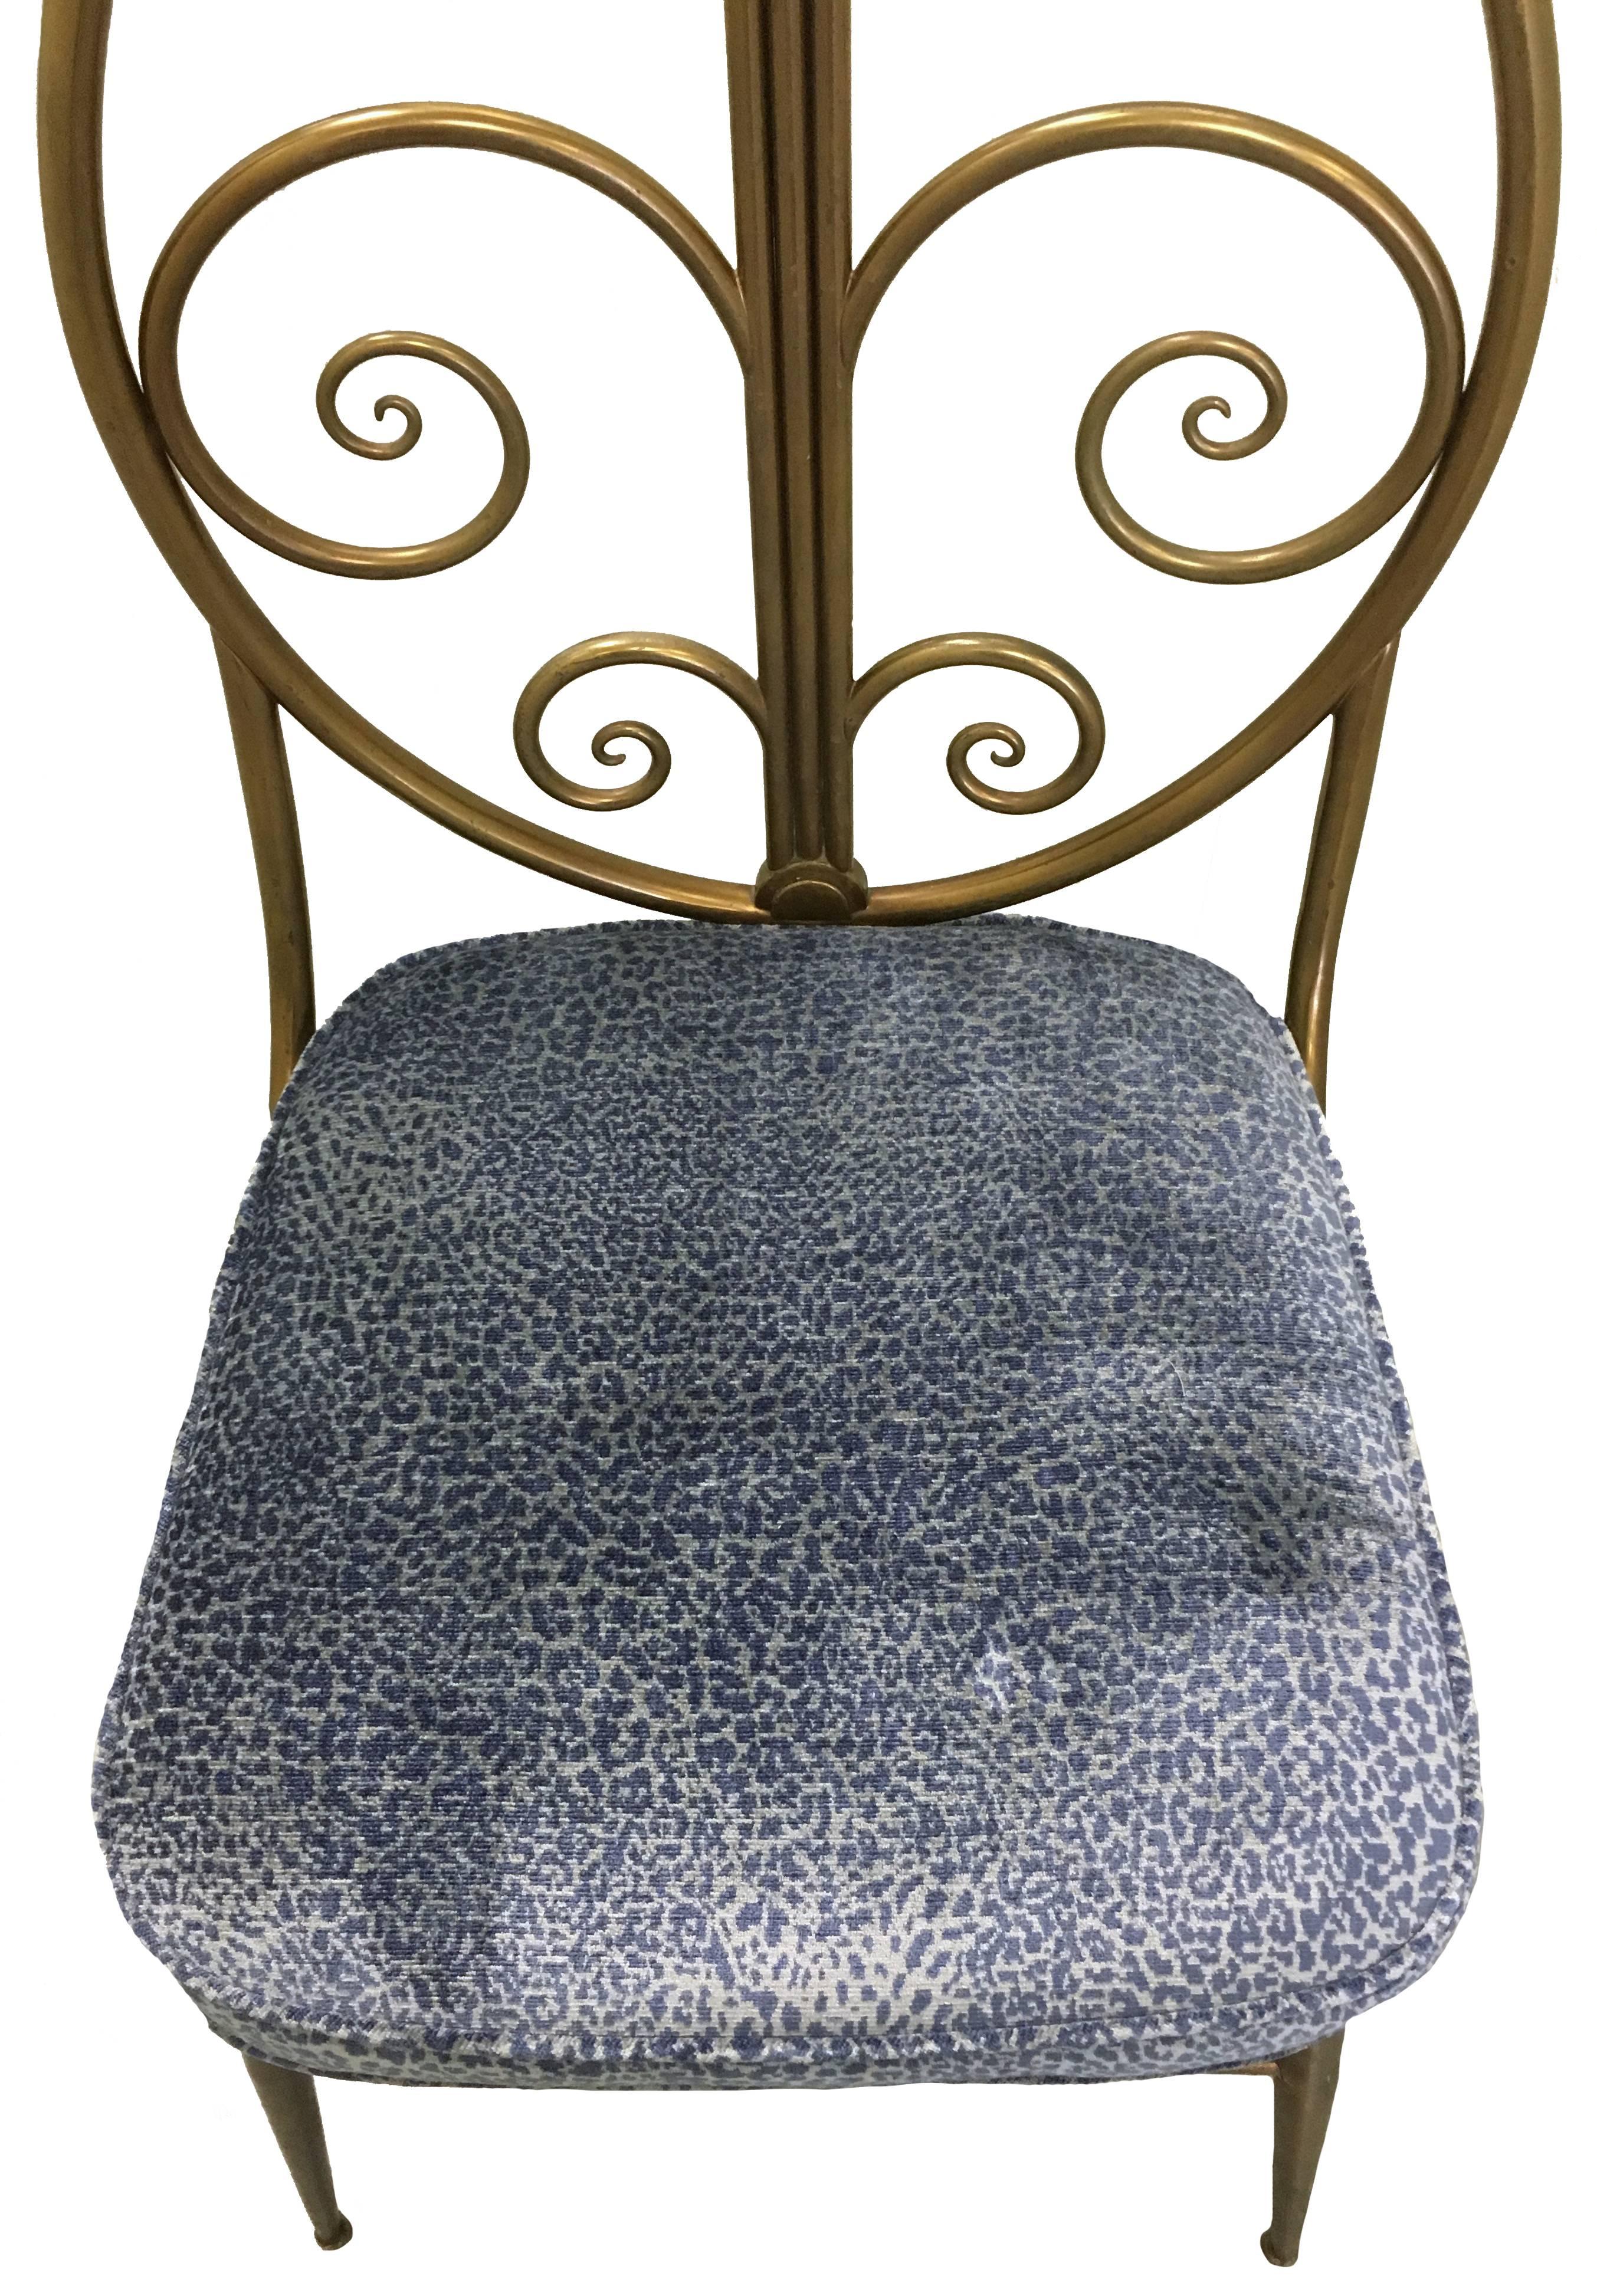 Mid-20th Century Italian Brass Chiavari Chair with Blue Leopard Upholstery